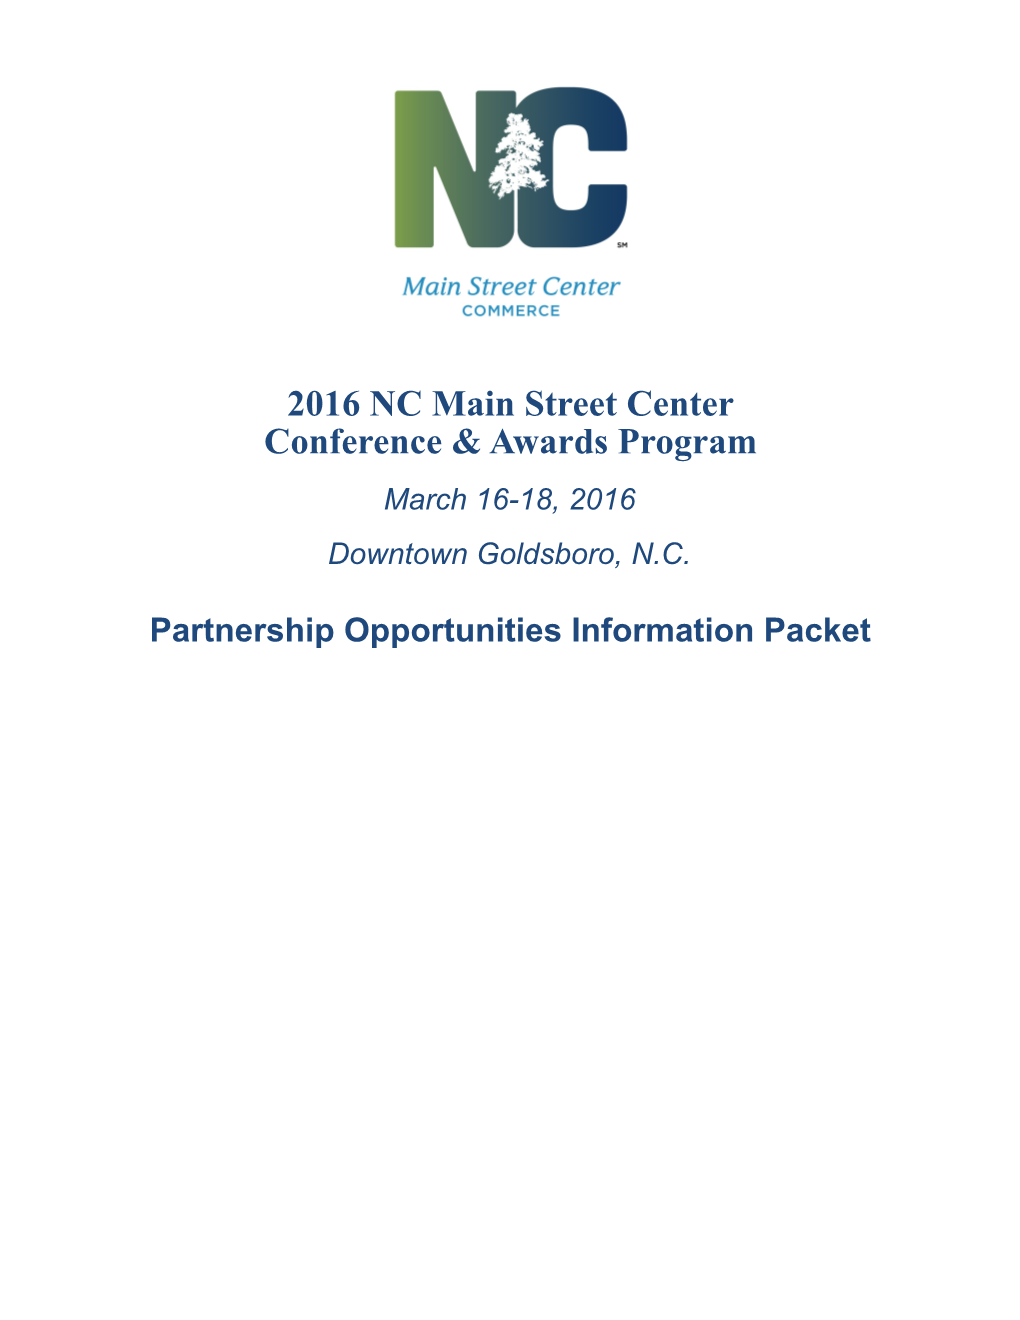 2016 NC Main Street Center Conference & Awards Program